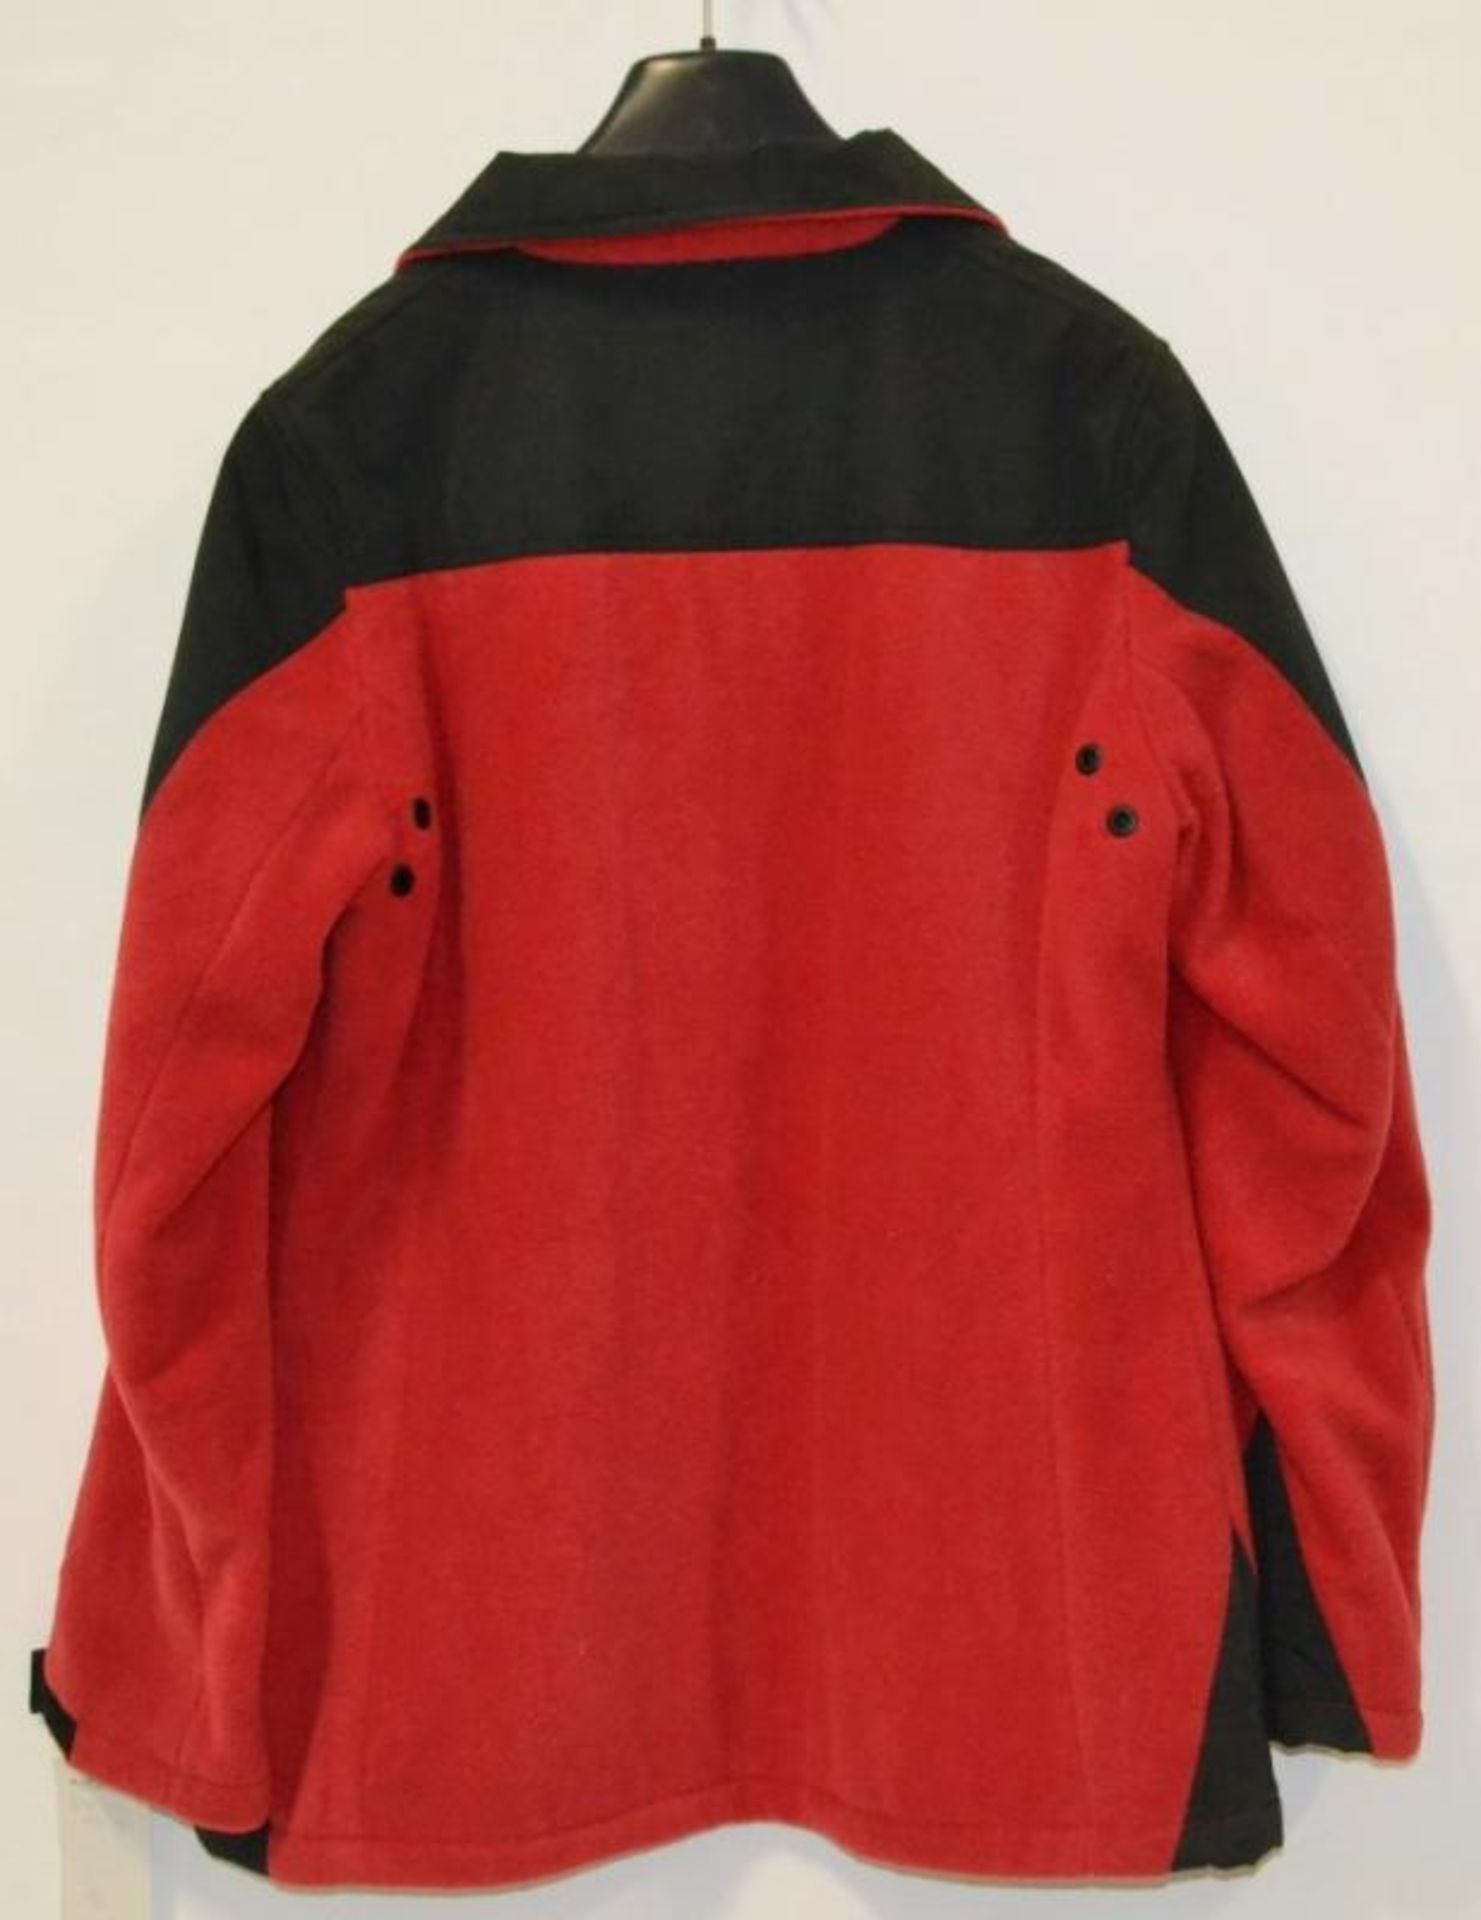 1 x Premium Branded Womens Winter Fleece Jacket - Wind Proof & Water Resistant - Colour: Red / Black - Image 2 of 6